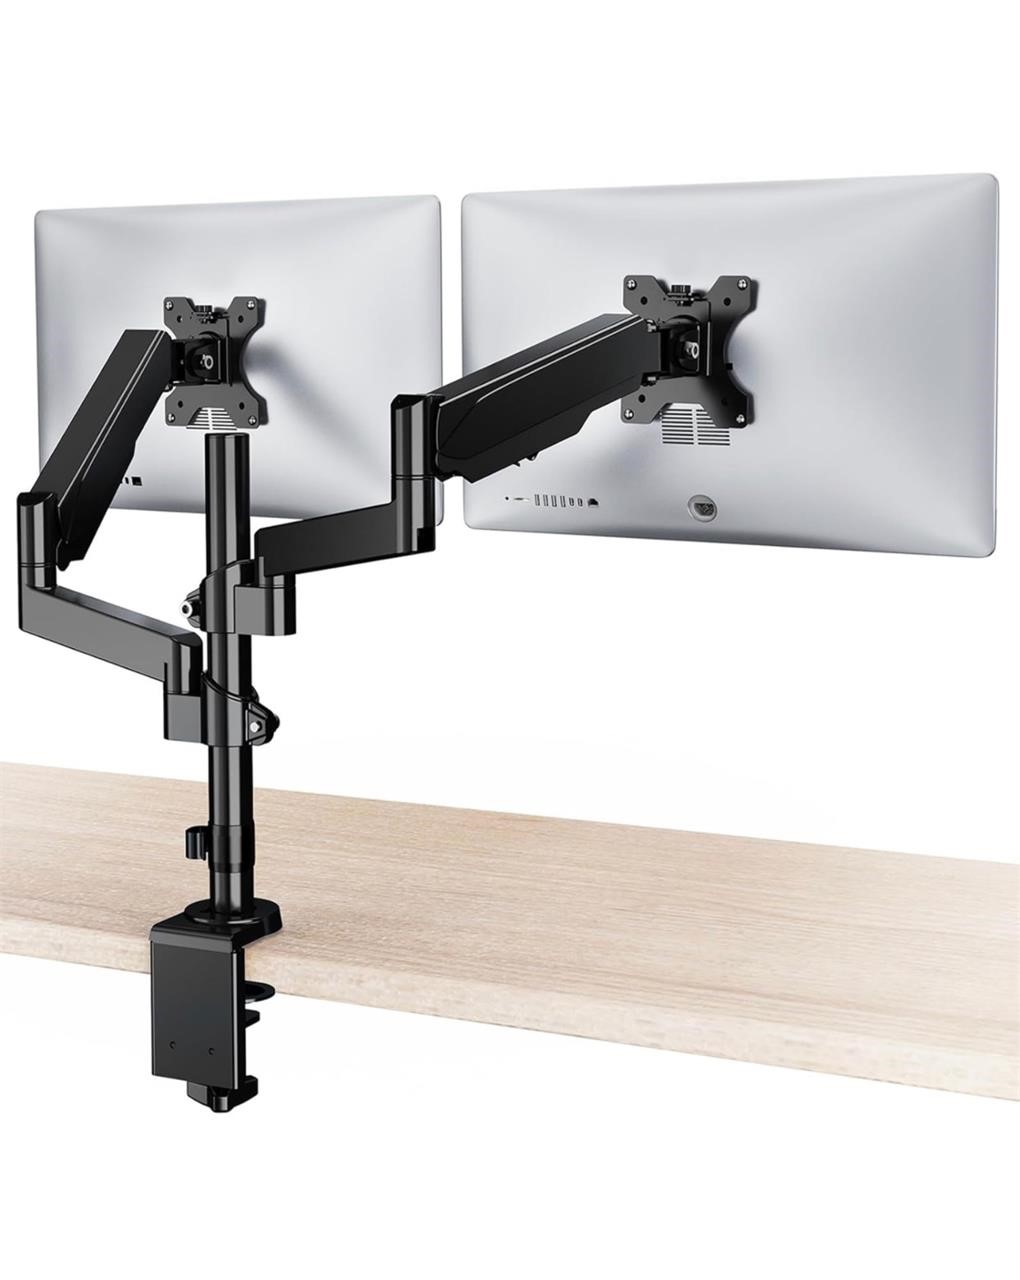 NEW $110 (32") Monitor Desk Mount